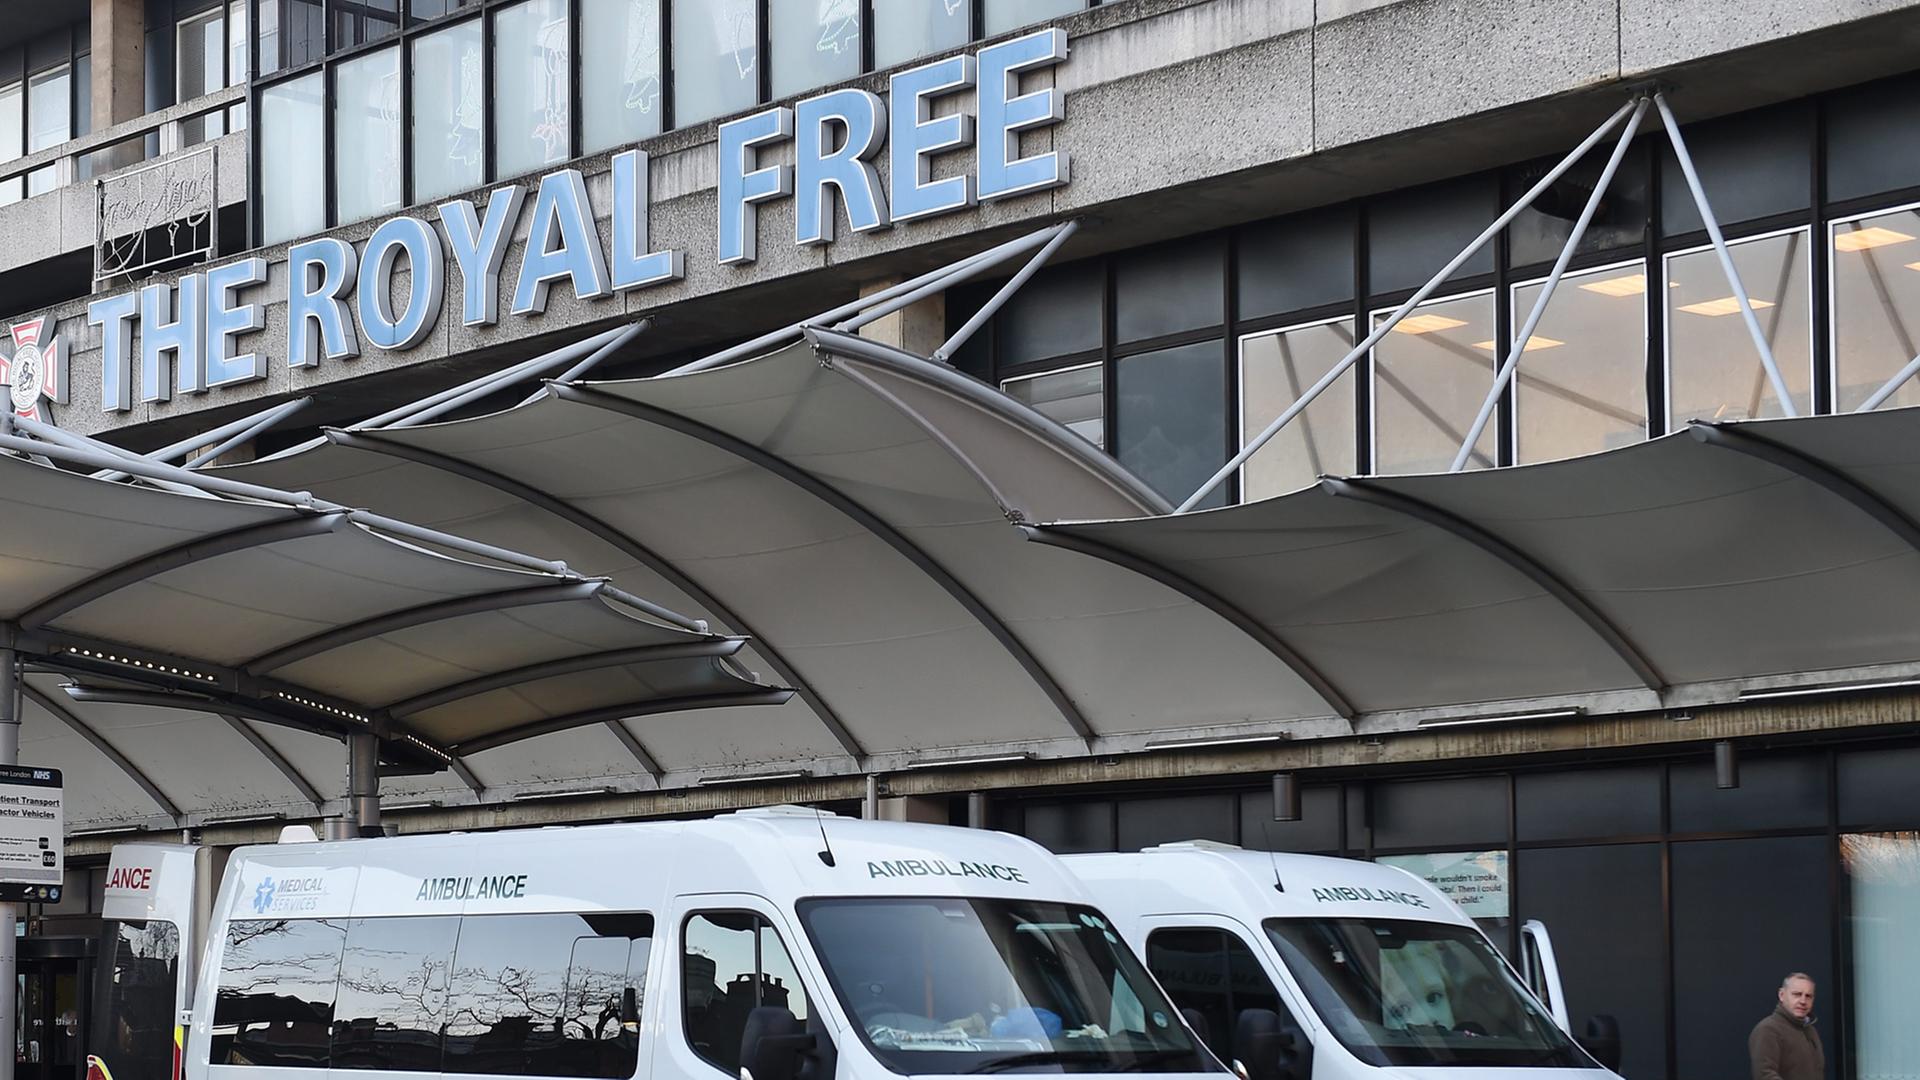 Der Eingang zum Royal Free Hospital in London.